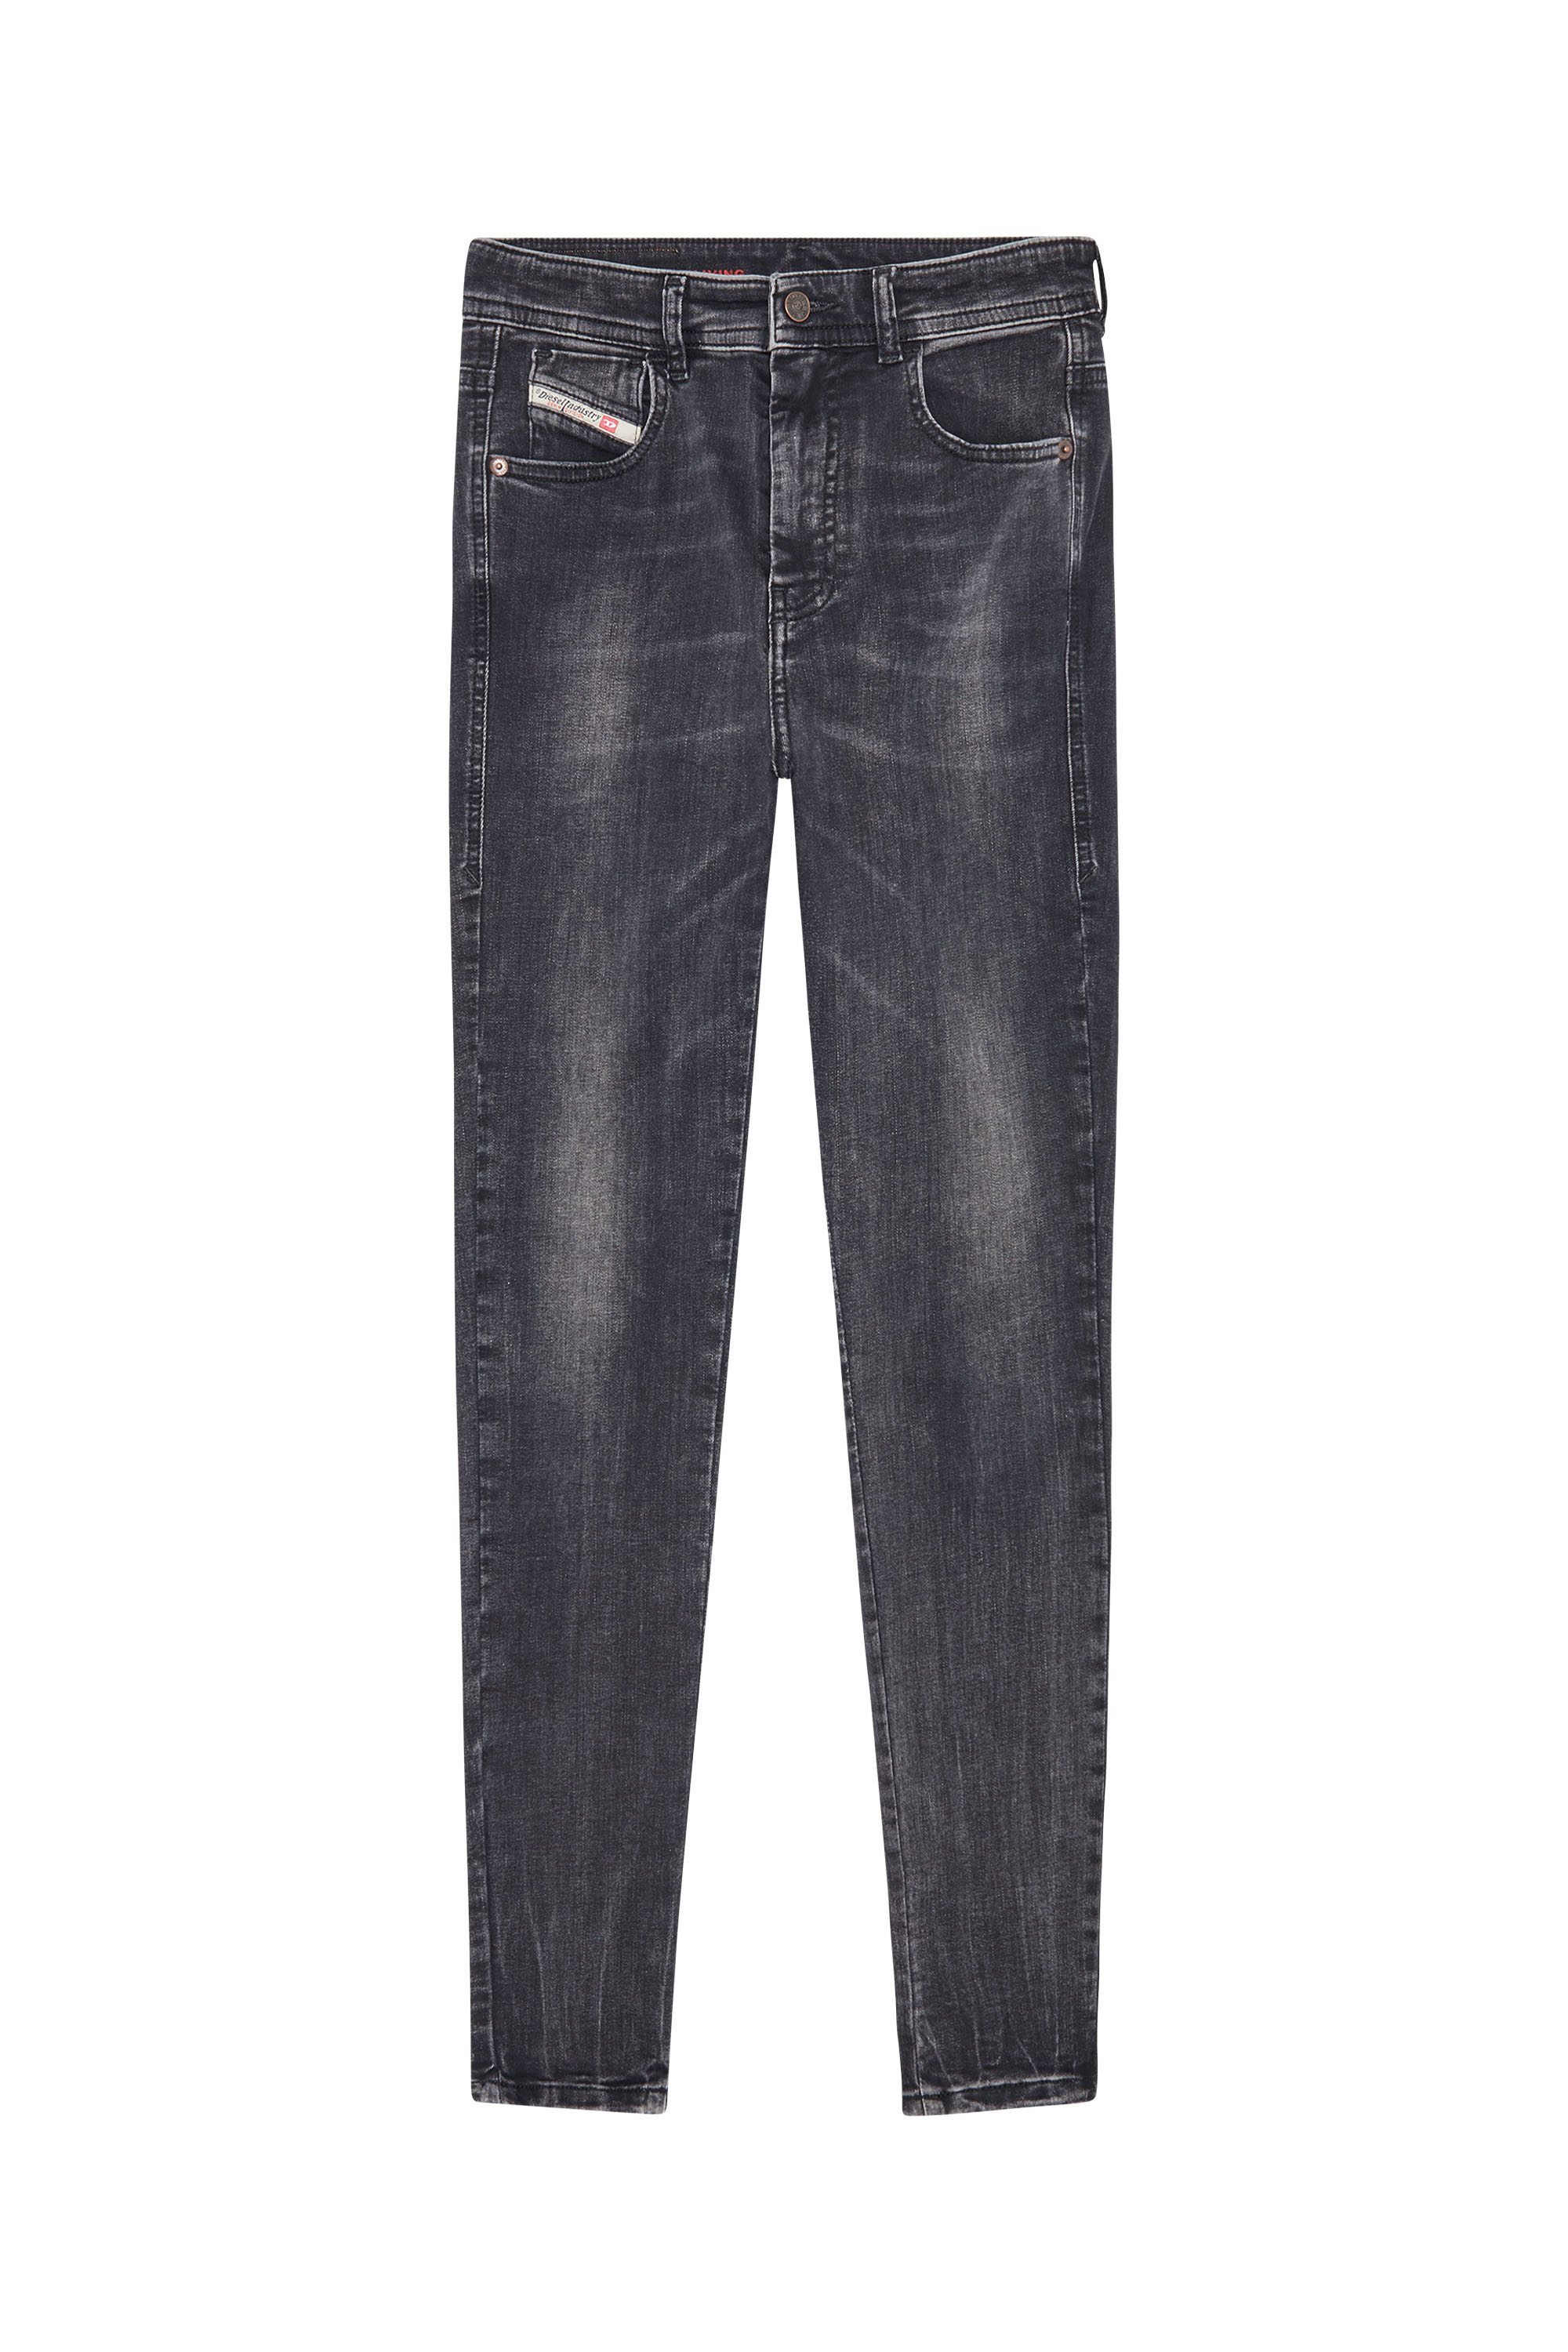 1984 SLANDY-HIGH 09C29 Super skinny Jeans, Black/Dark grey - Jeans